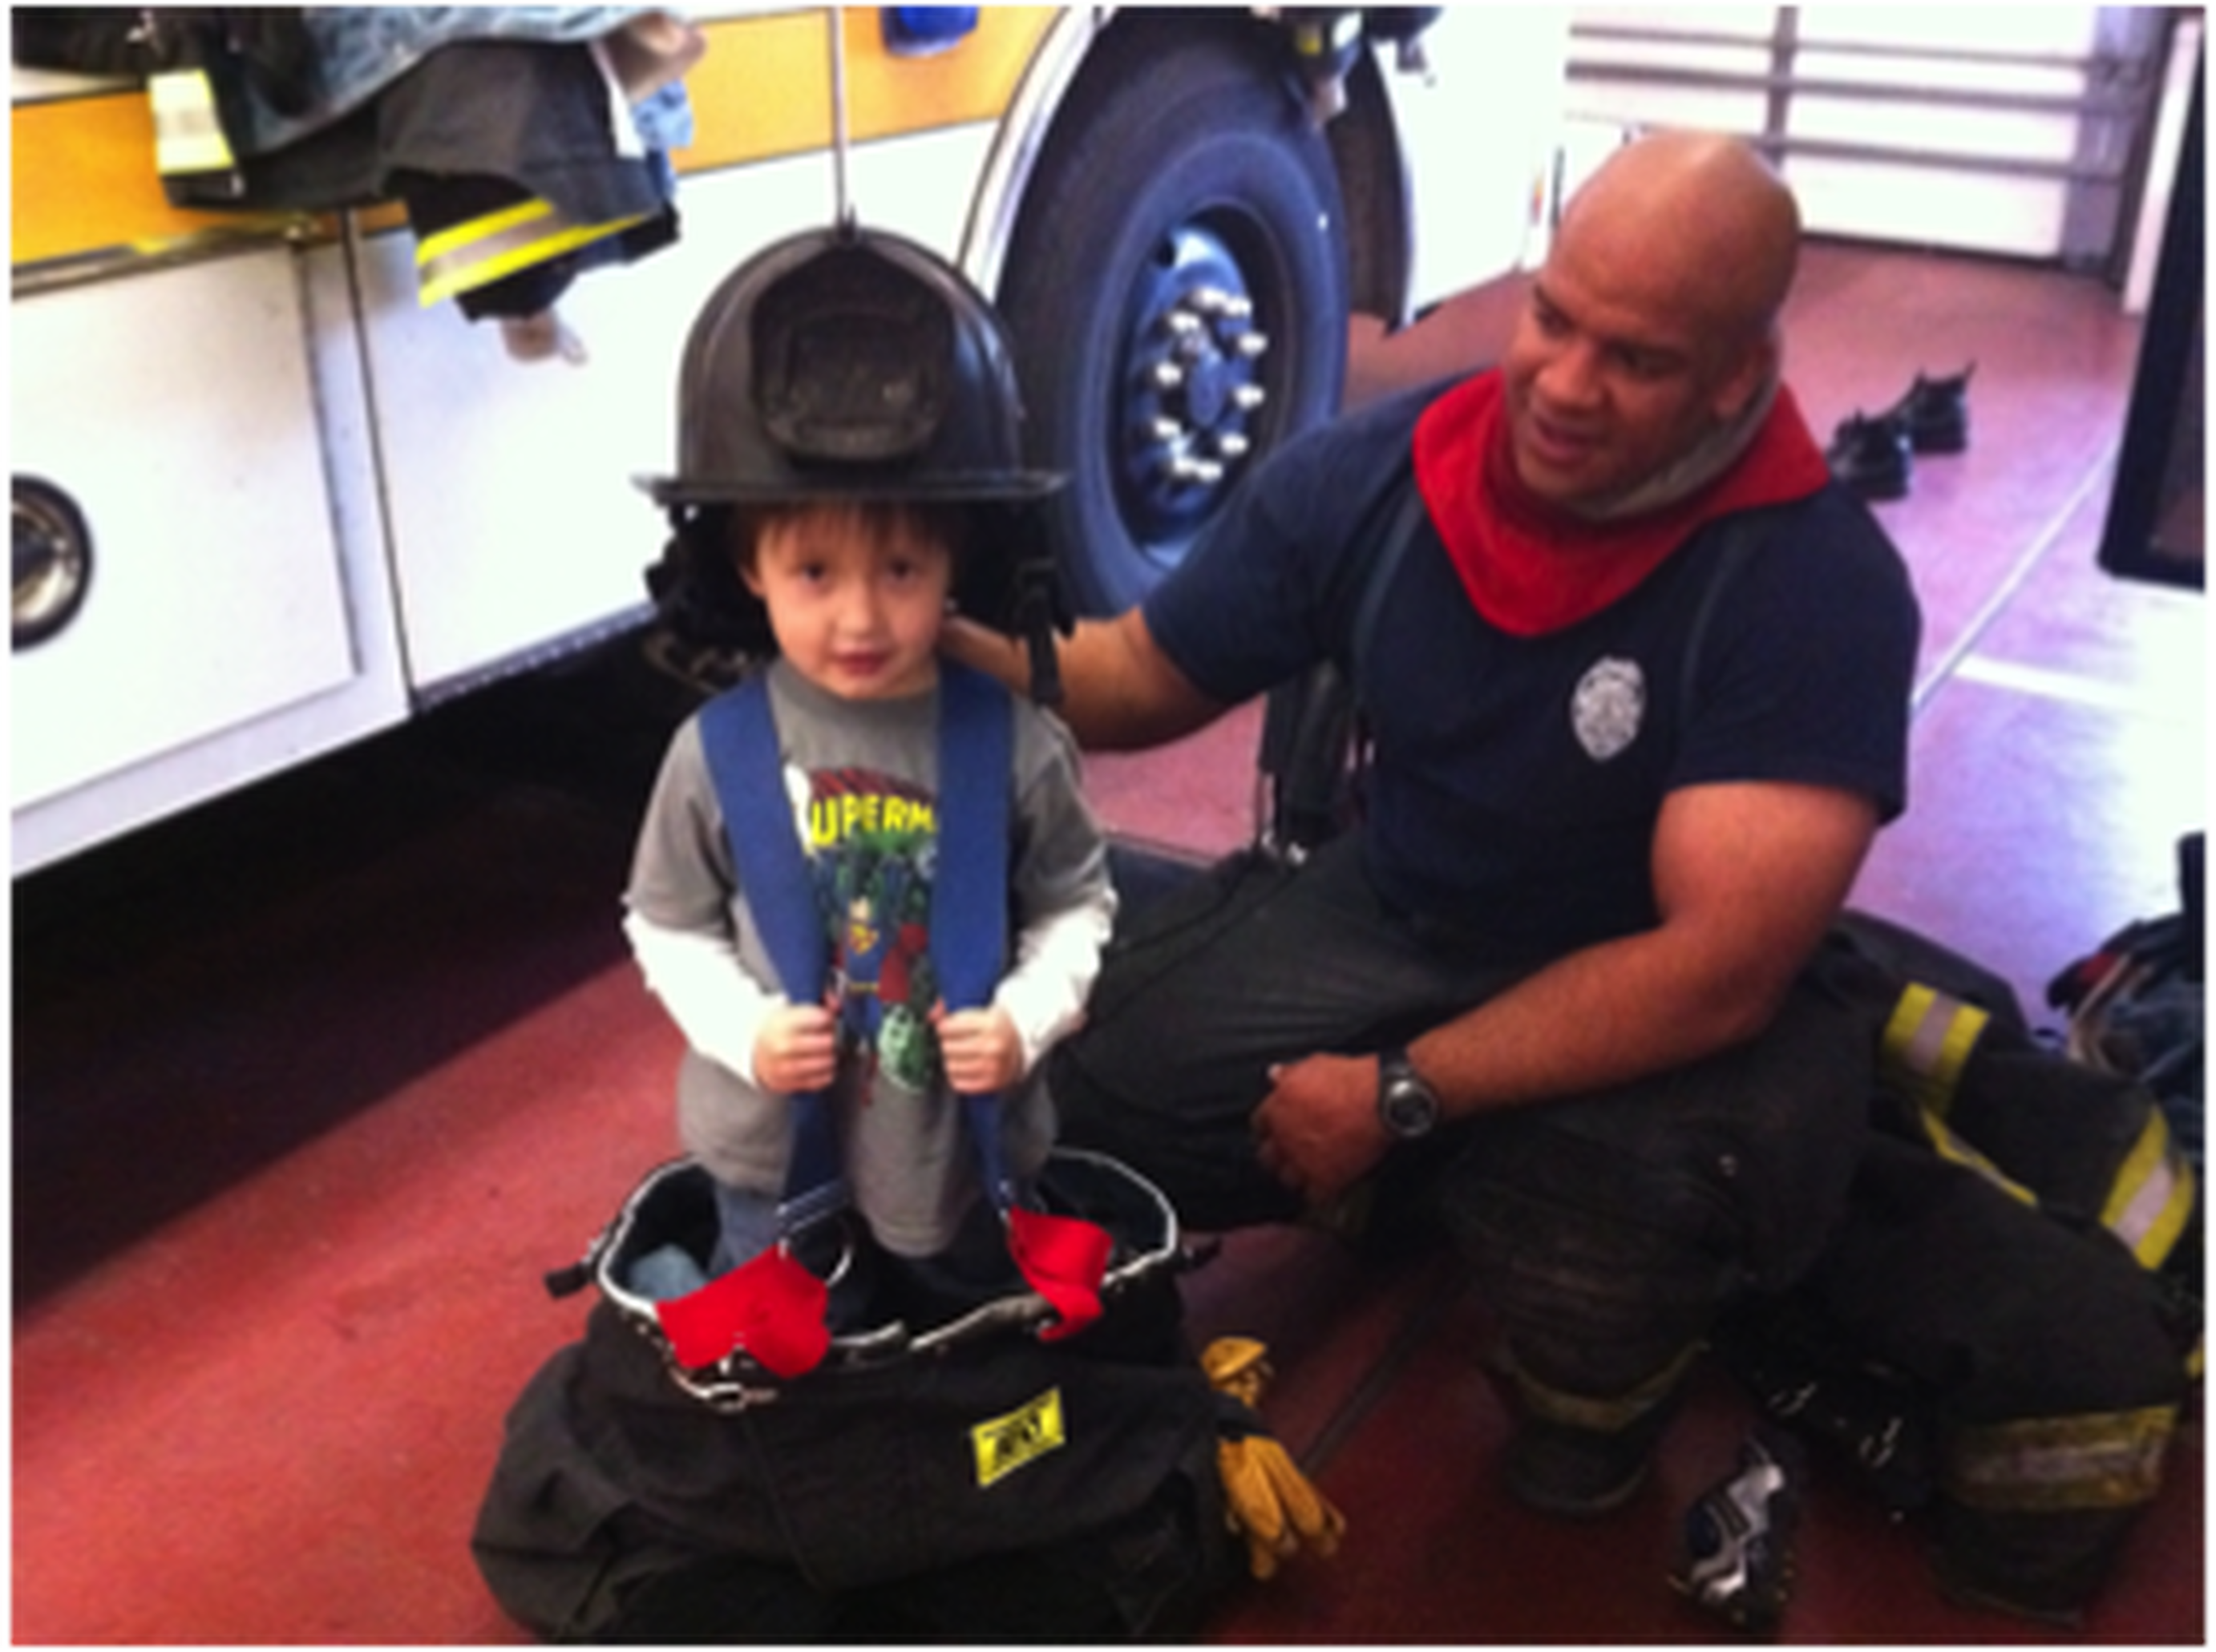 The Little Firefighter